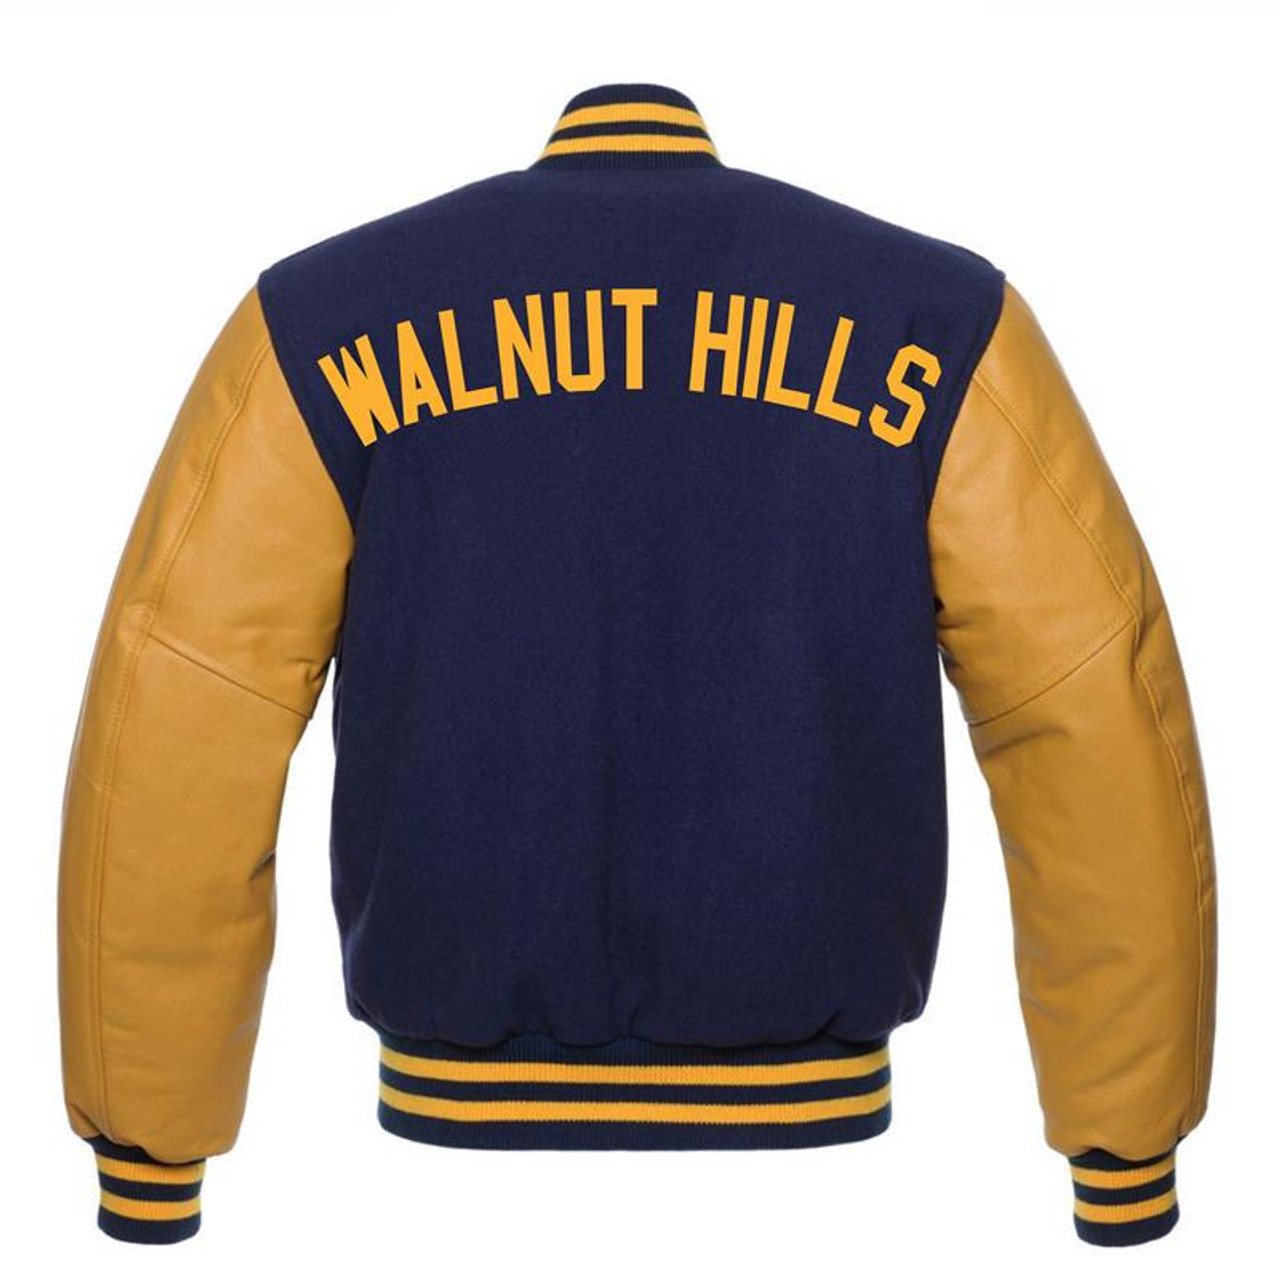 Vintage Walnut Hills High School Cincinnati Ohio Shirt SIZE LARGE MADE IN  USA 